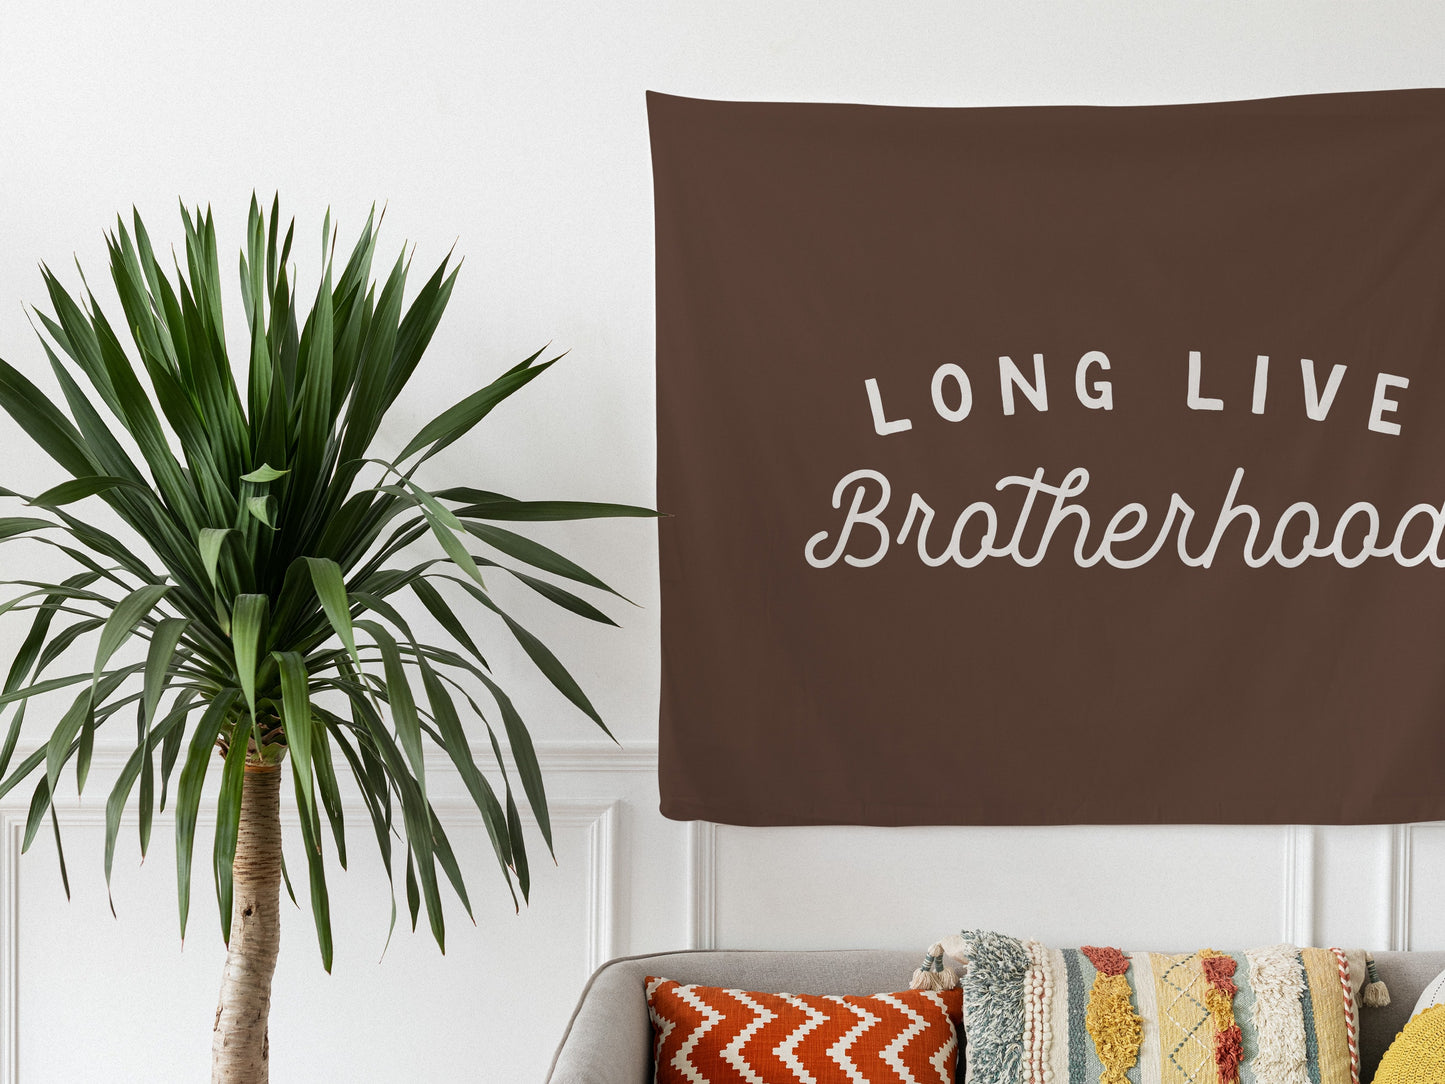 Long Live Brotherhood Tapestry